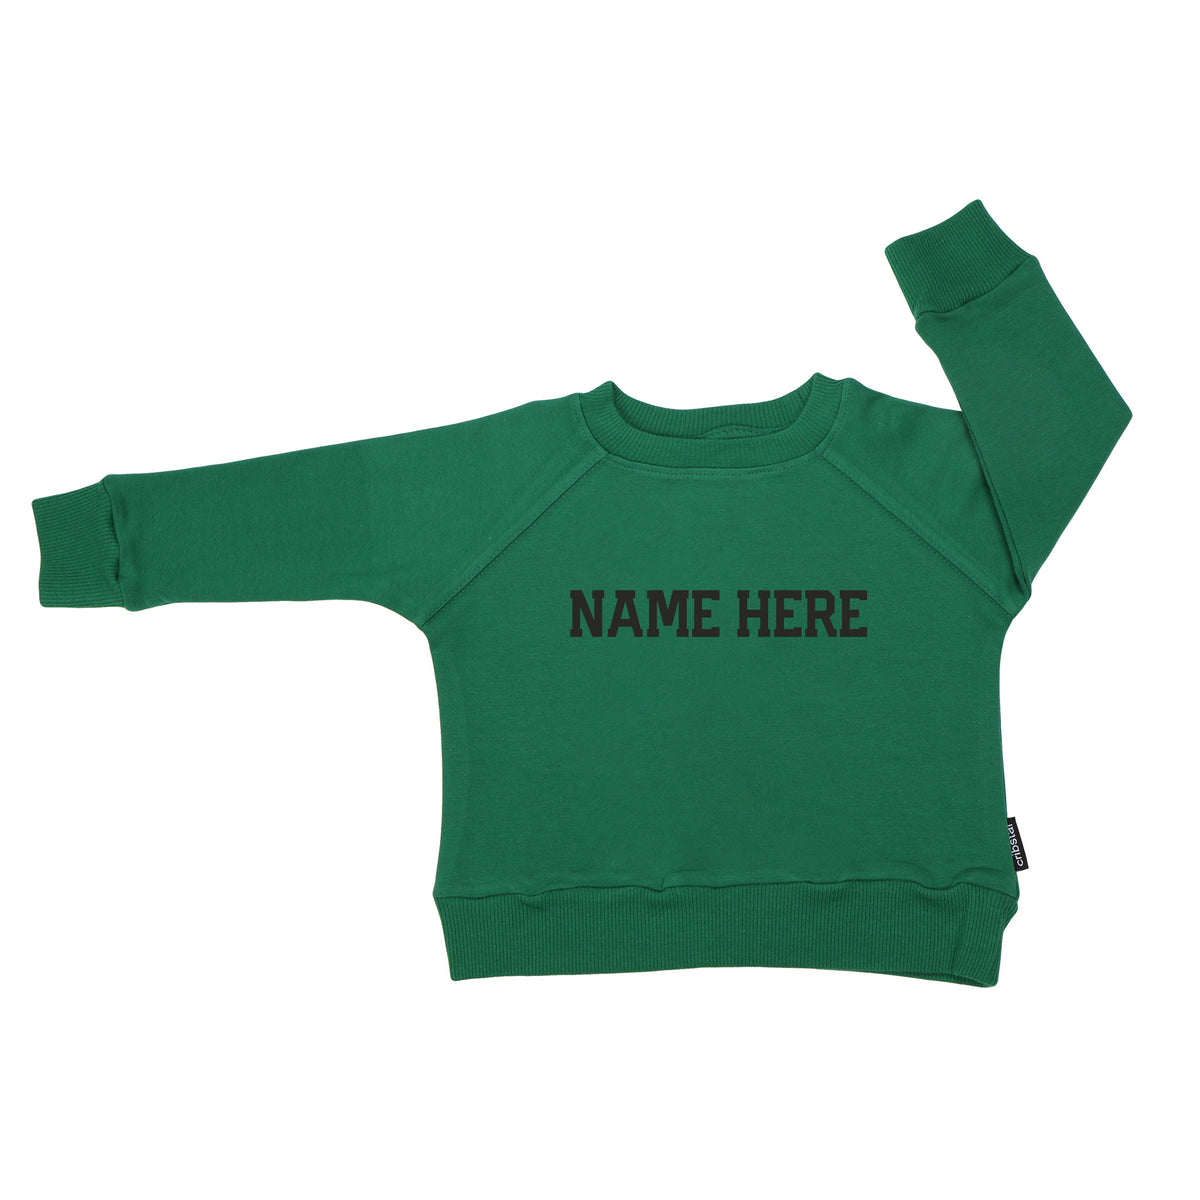 SPECIAL BUY - Personalised Sweatshirt - Forrest Green